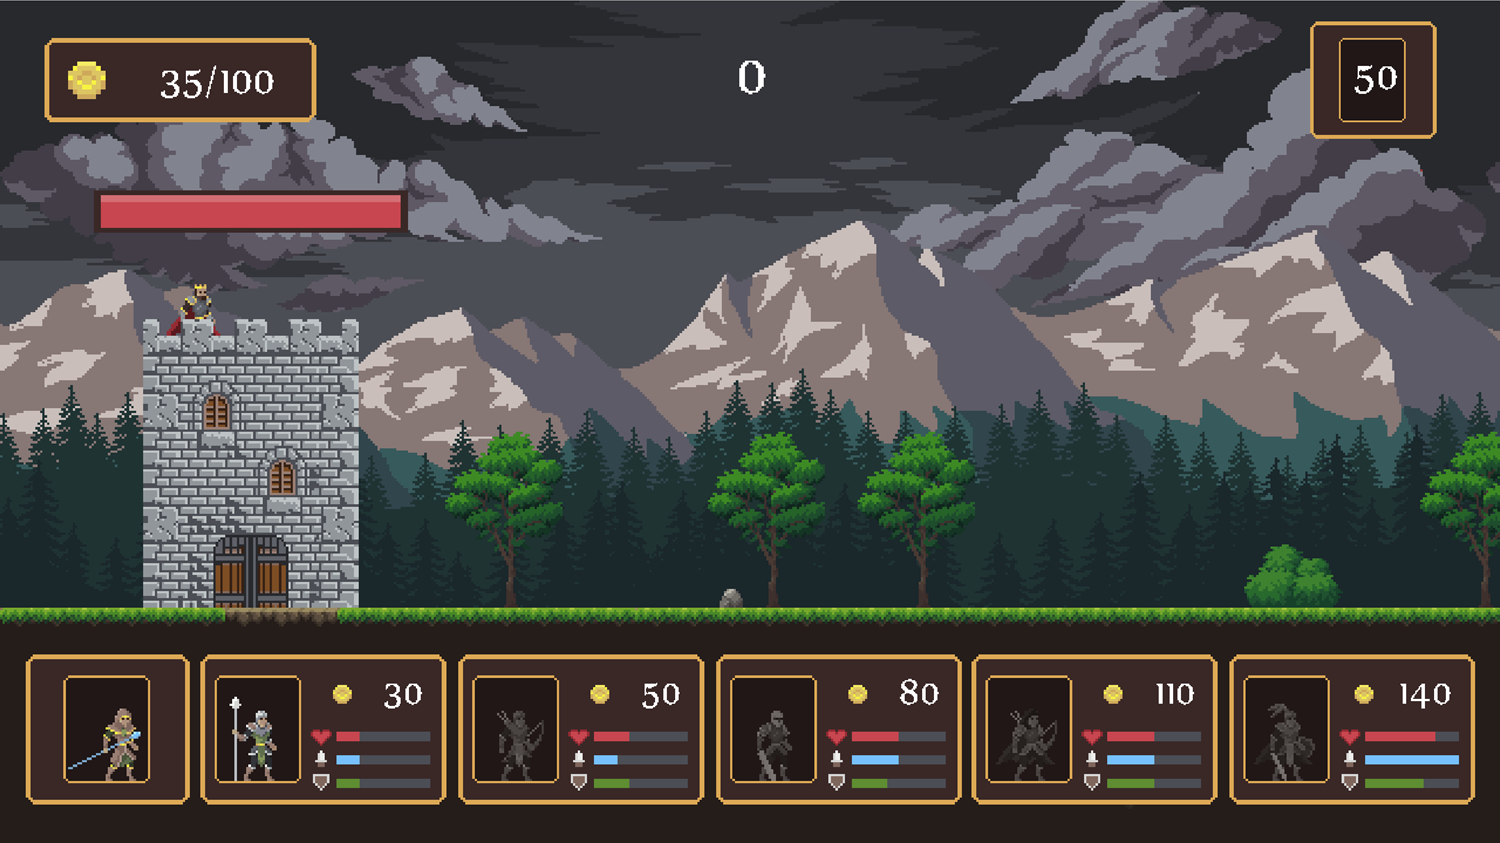 Defense of the Kingdom Game Final Level Screenshot.